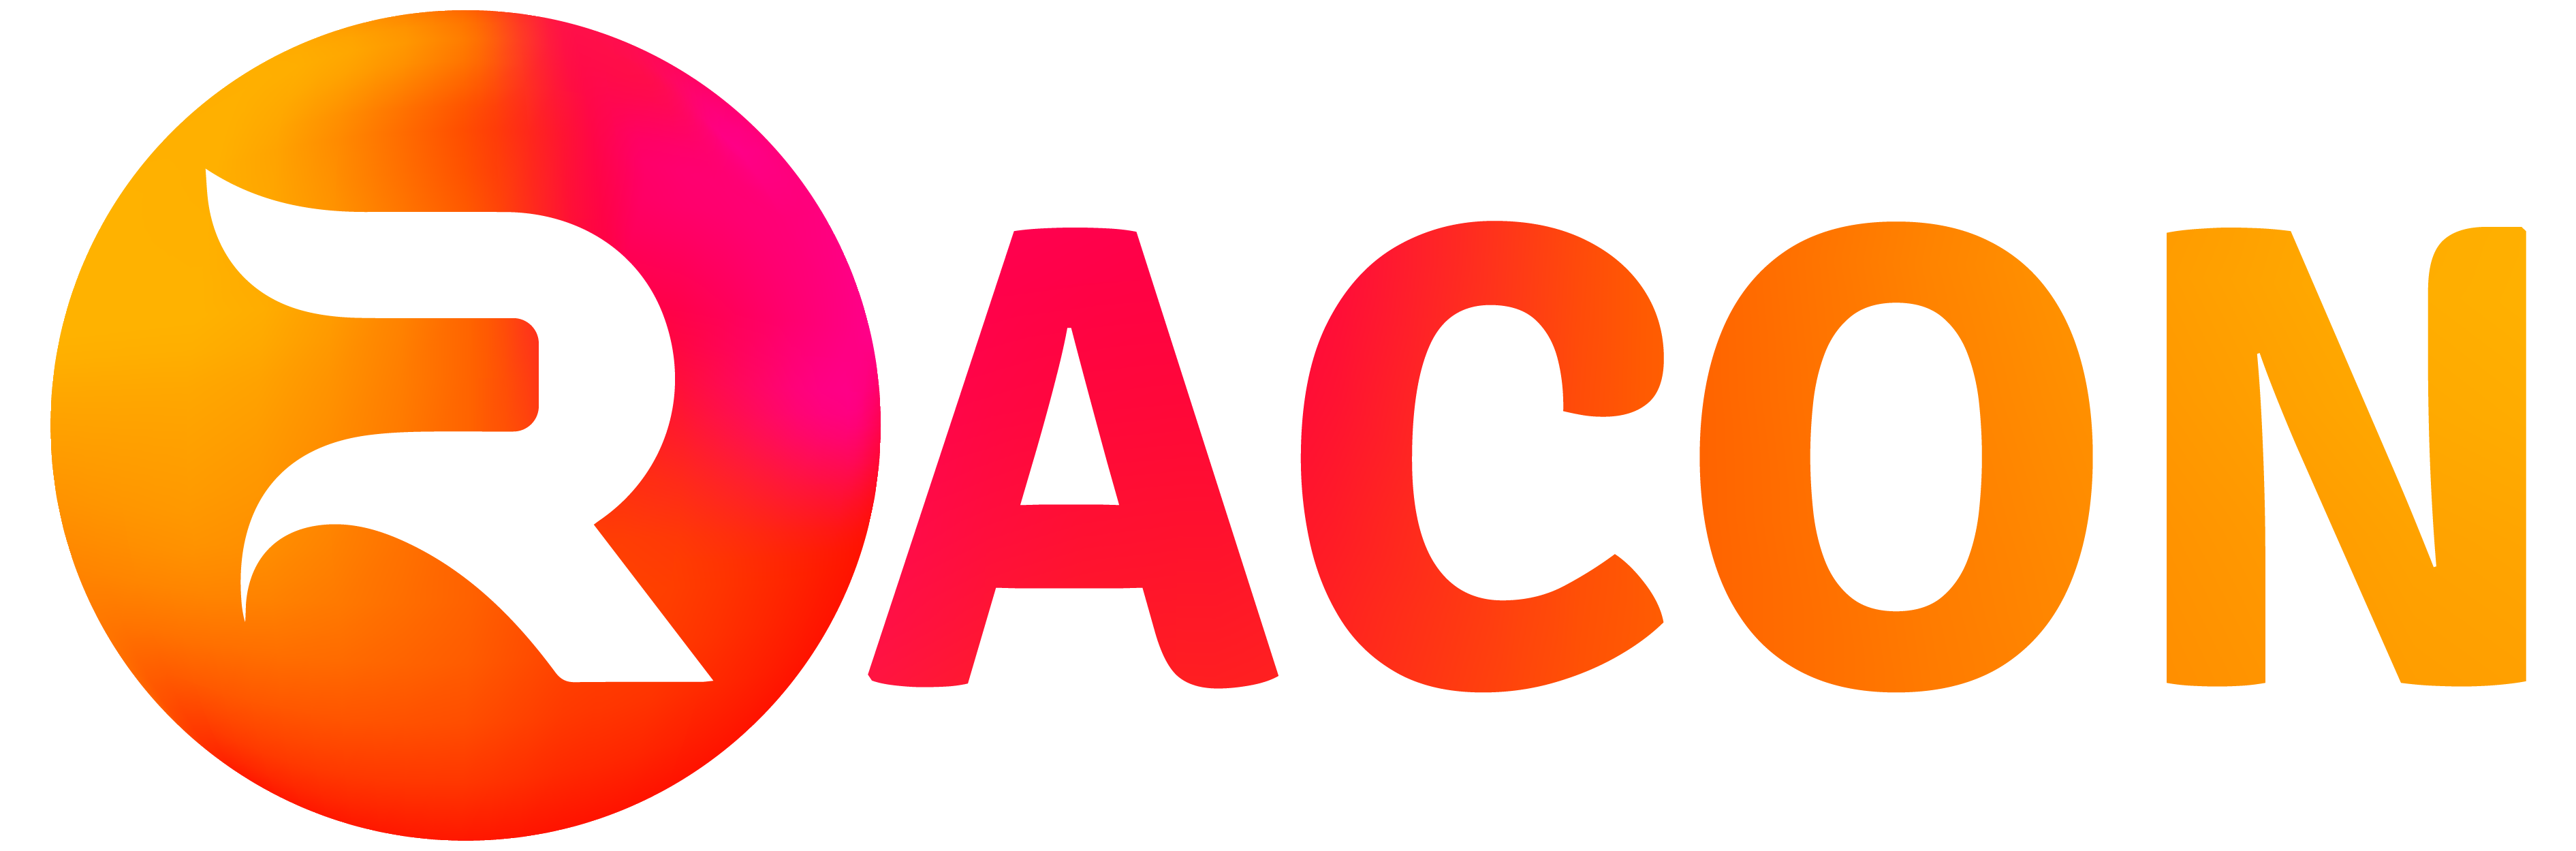 Logo vracon 2x